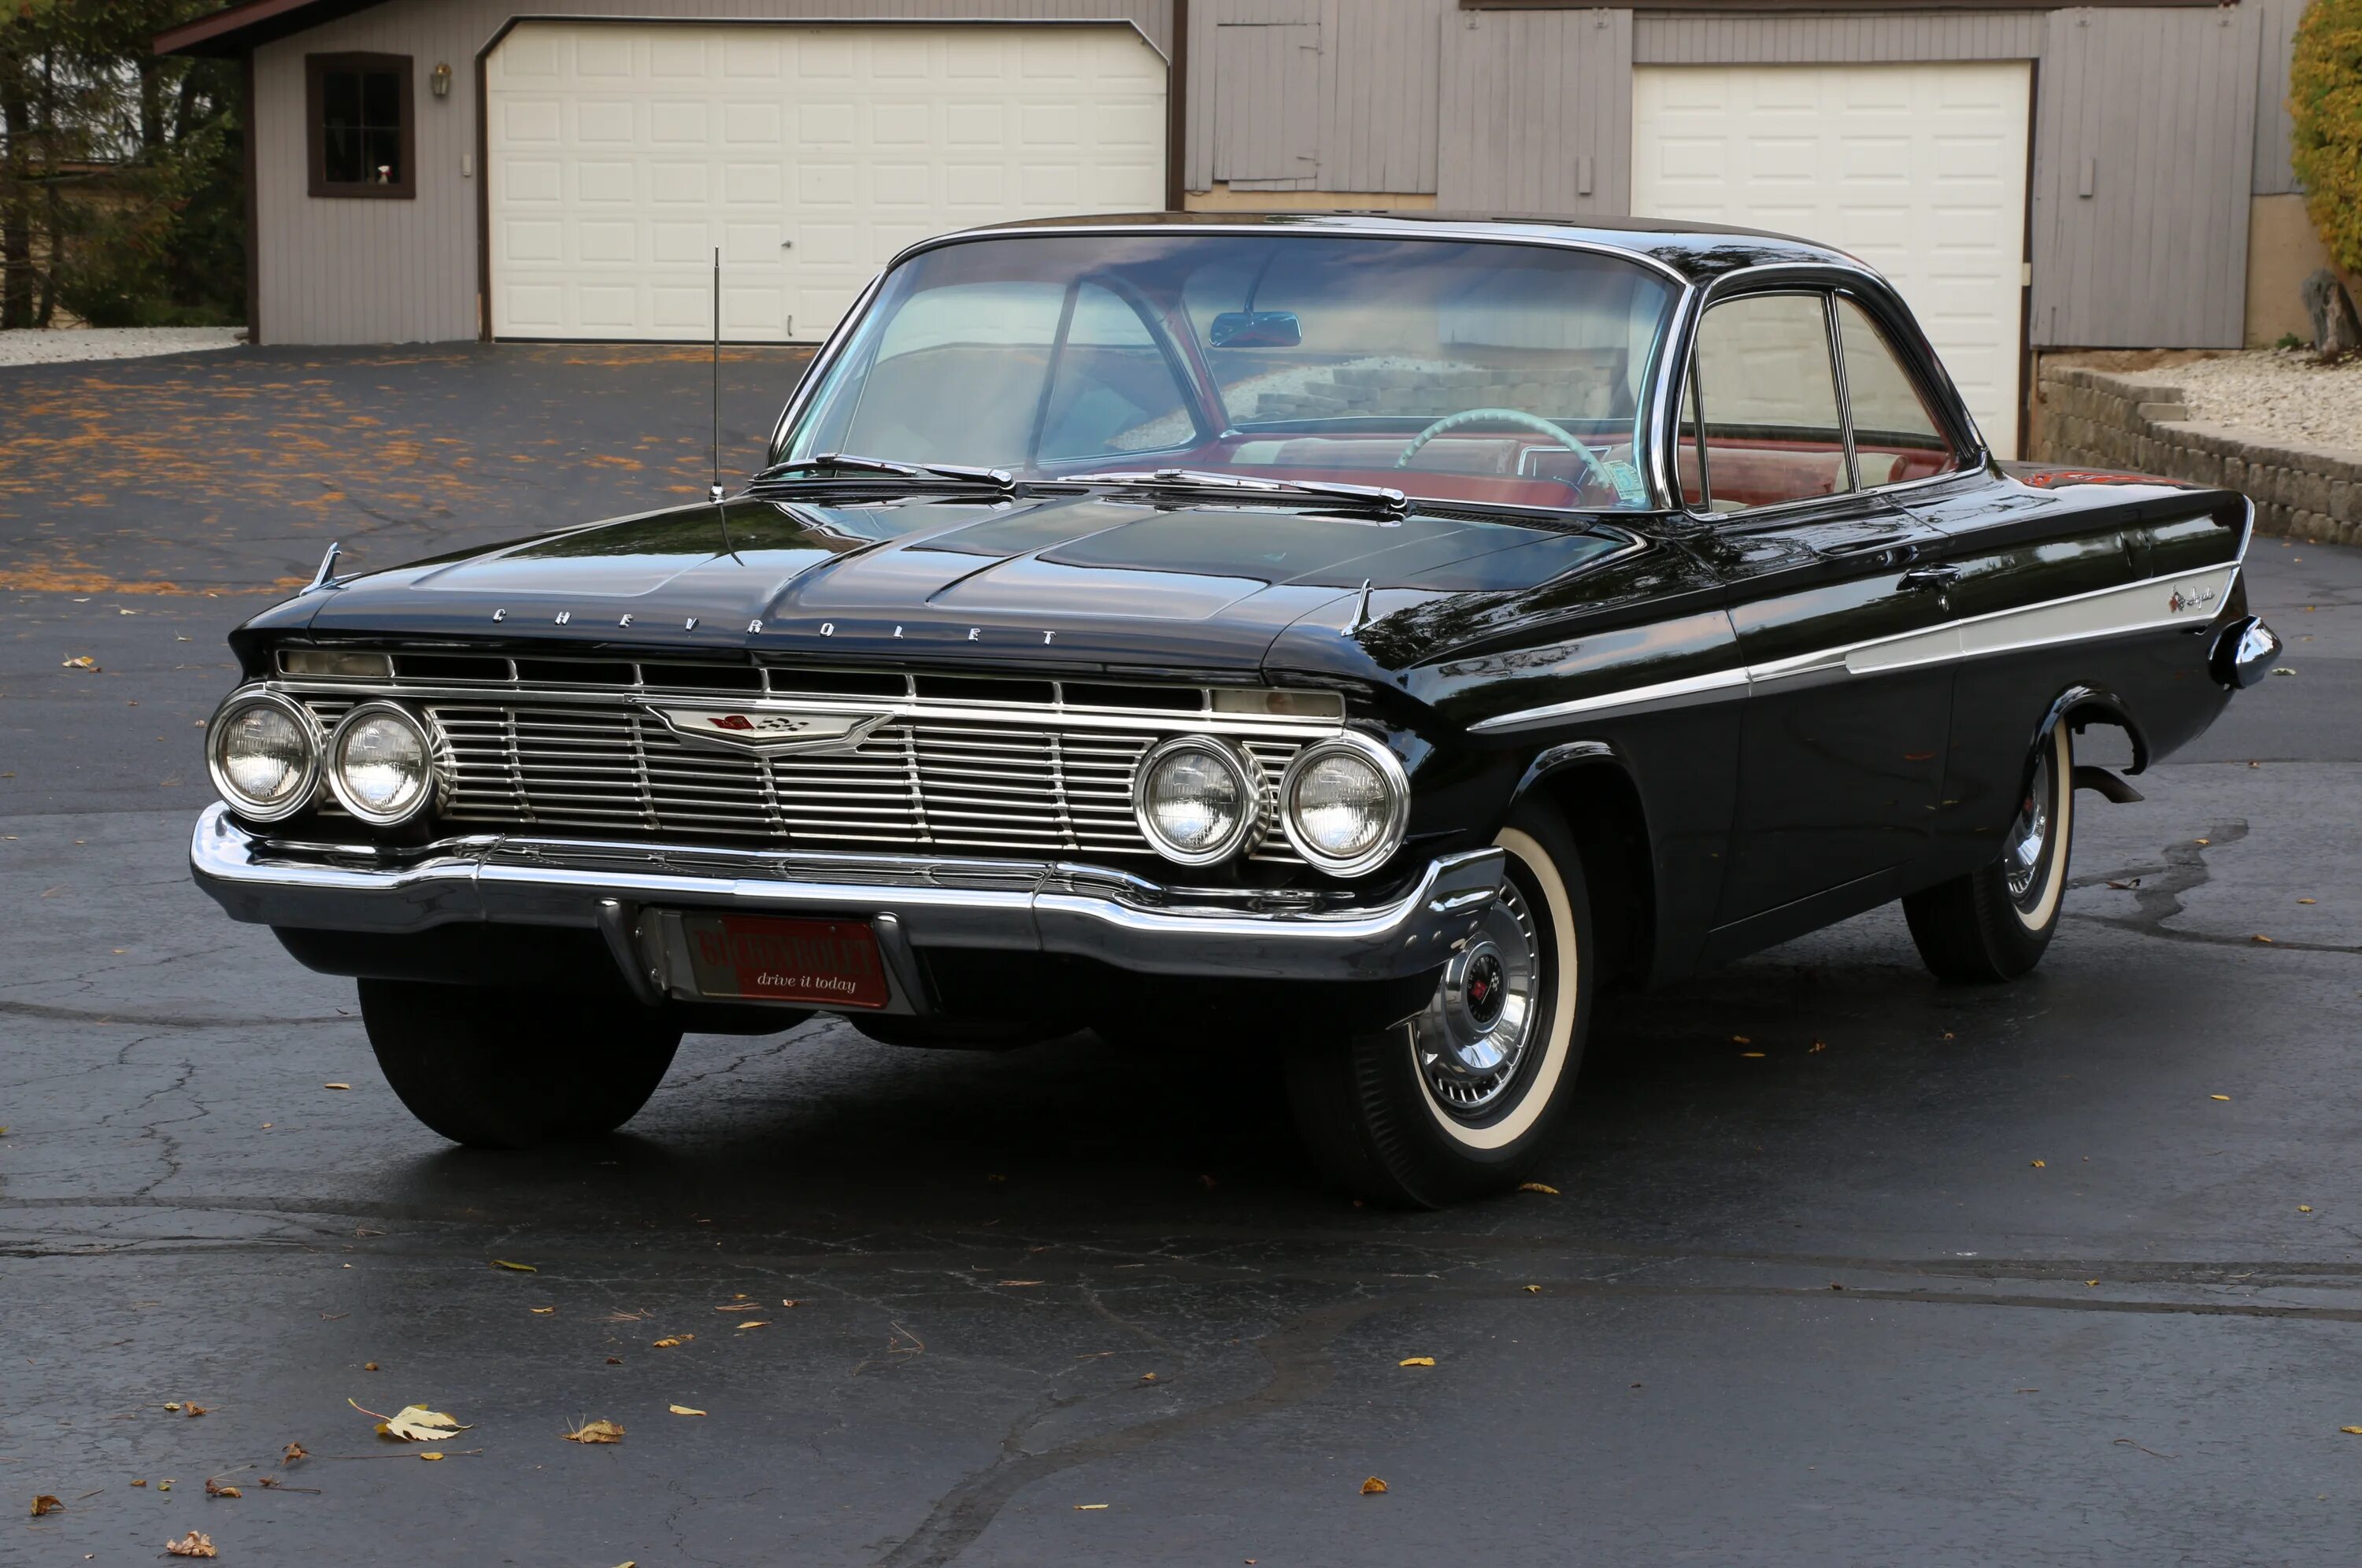 Шевроле Импала 1967. Chevrolet Impala 1961. Автомобиль Шевроле Импала 1967. Chevrolet Impala 1967 хардтоп.